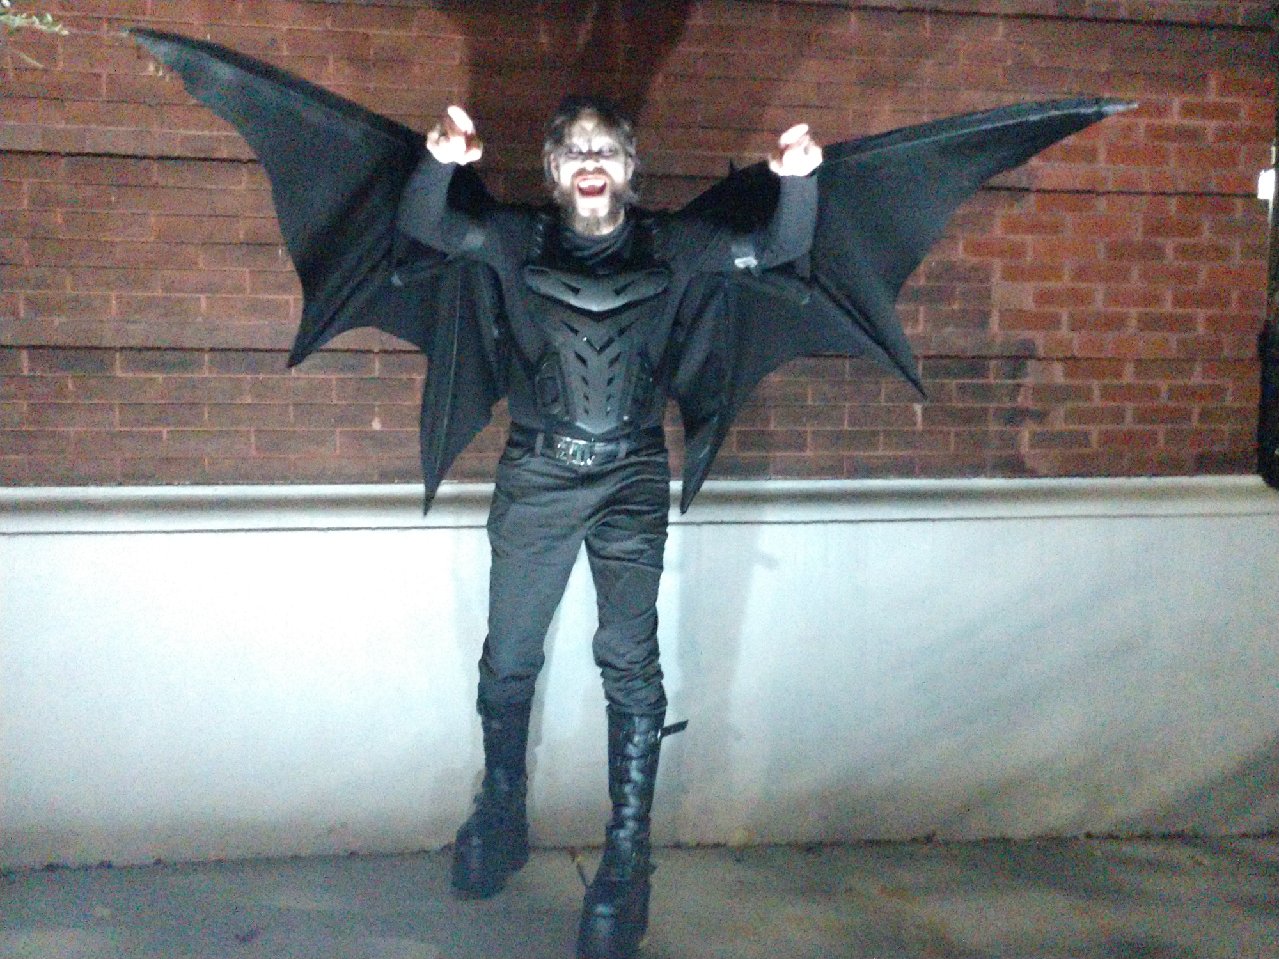 DIY Vampire Costume